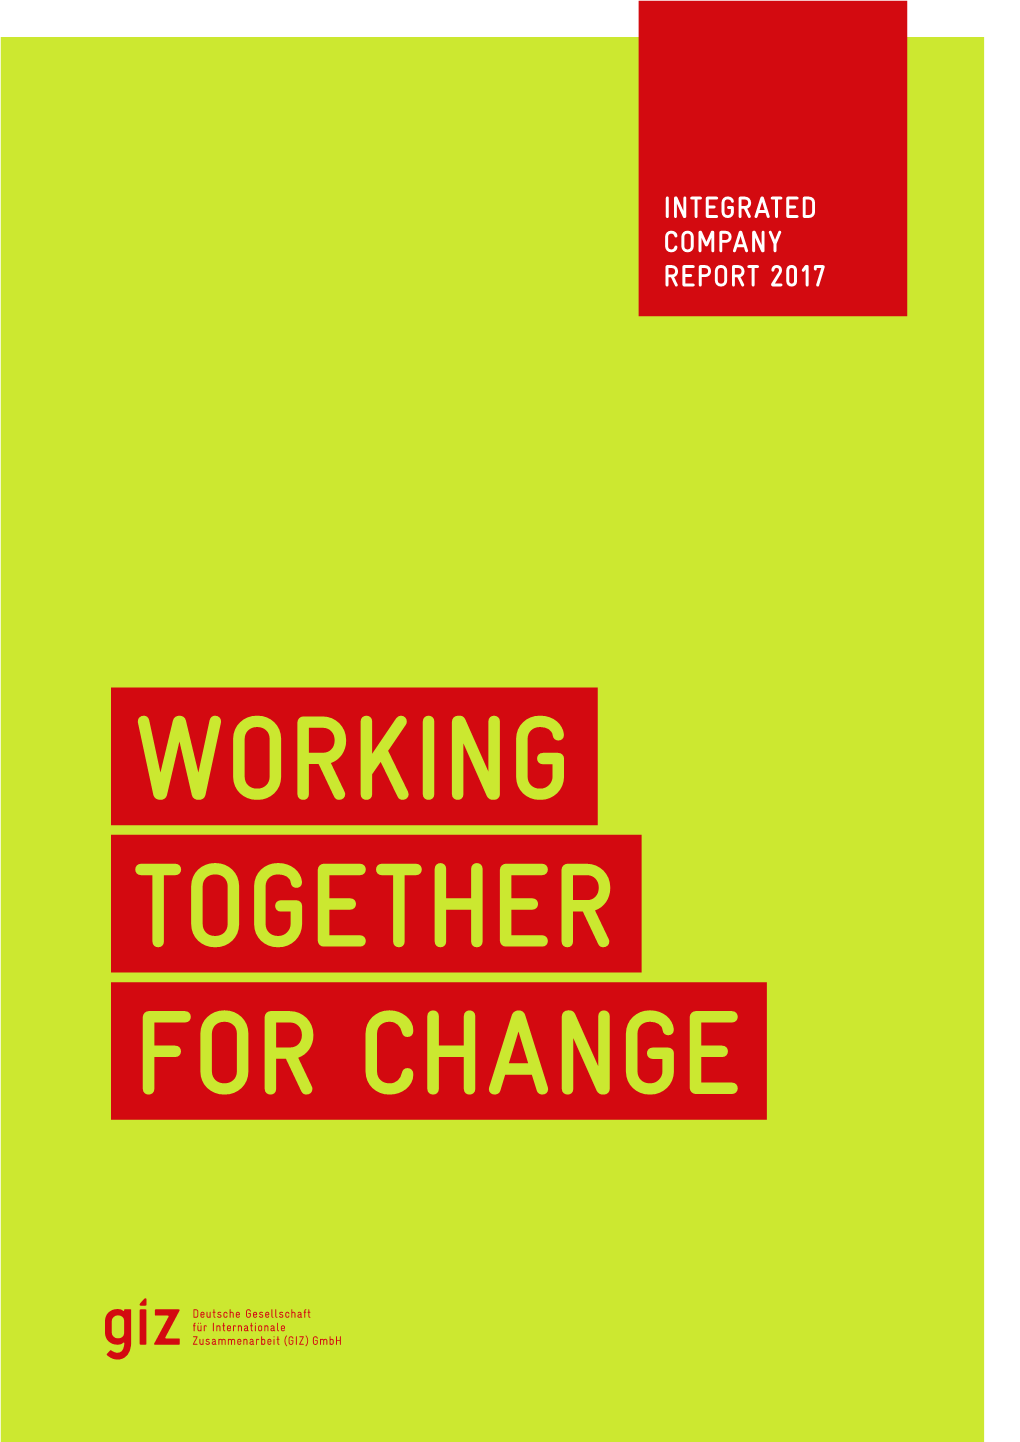 Integrated Company Report 2017 (PDF, 5.68MB